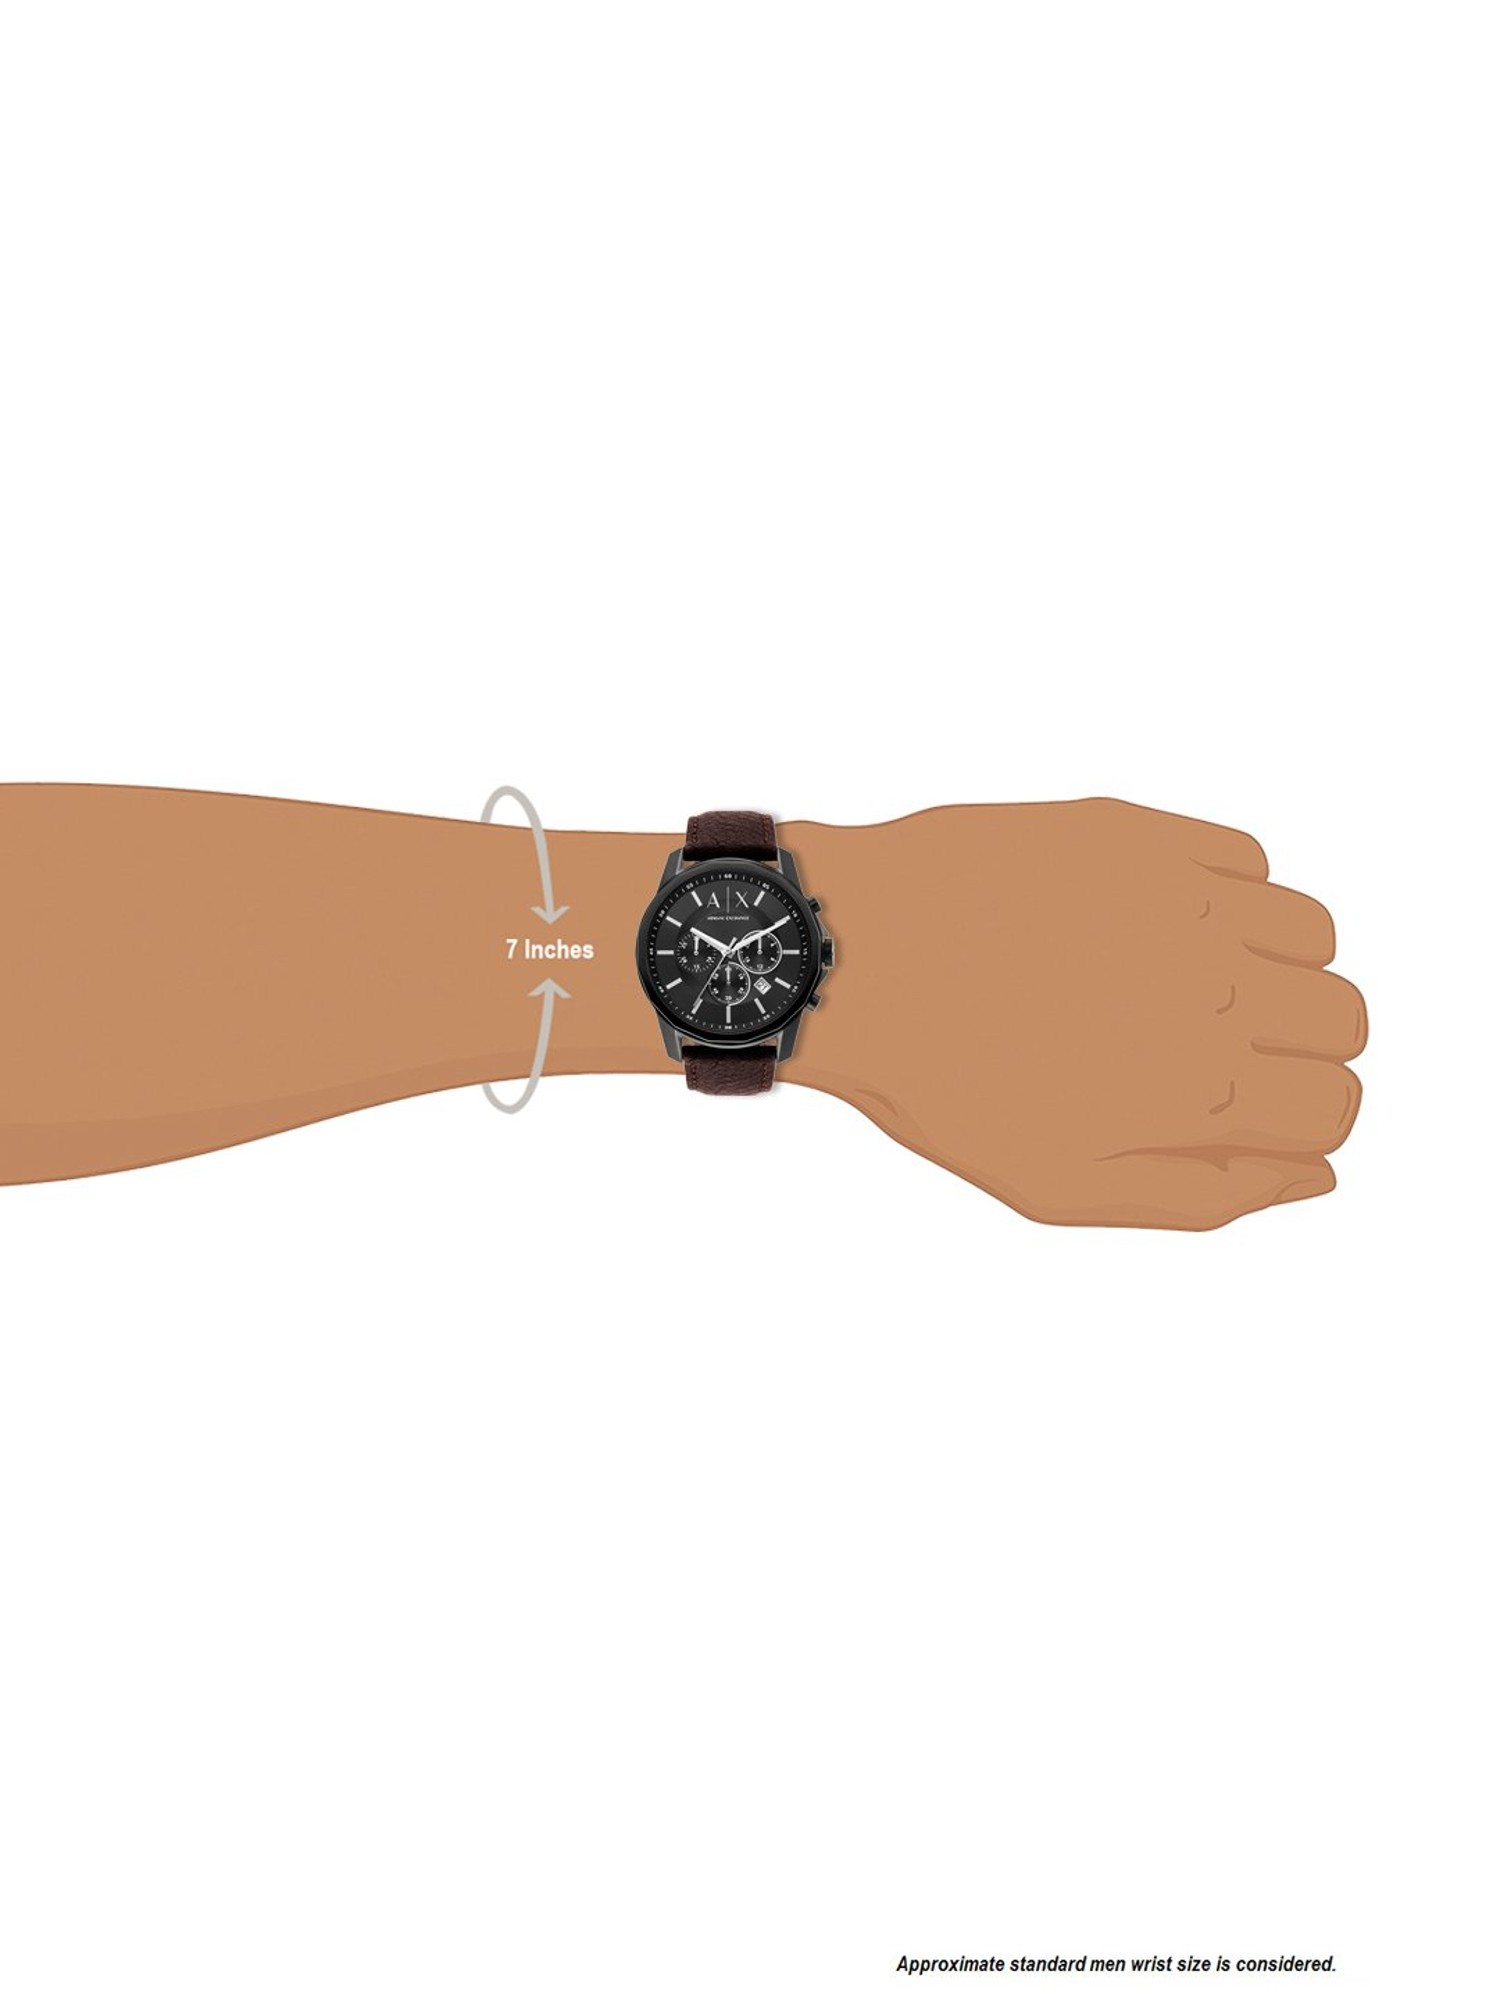 Buy ARMANI EXCHANGE AX1732 Analog Watch for Men at Best Price @ Tata CLiQ